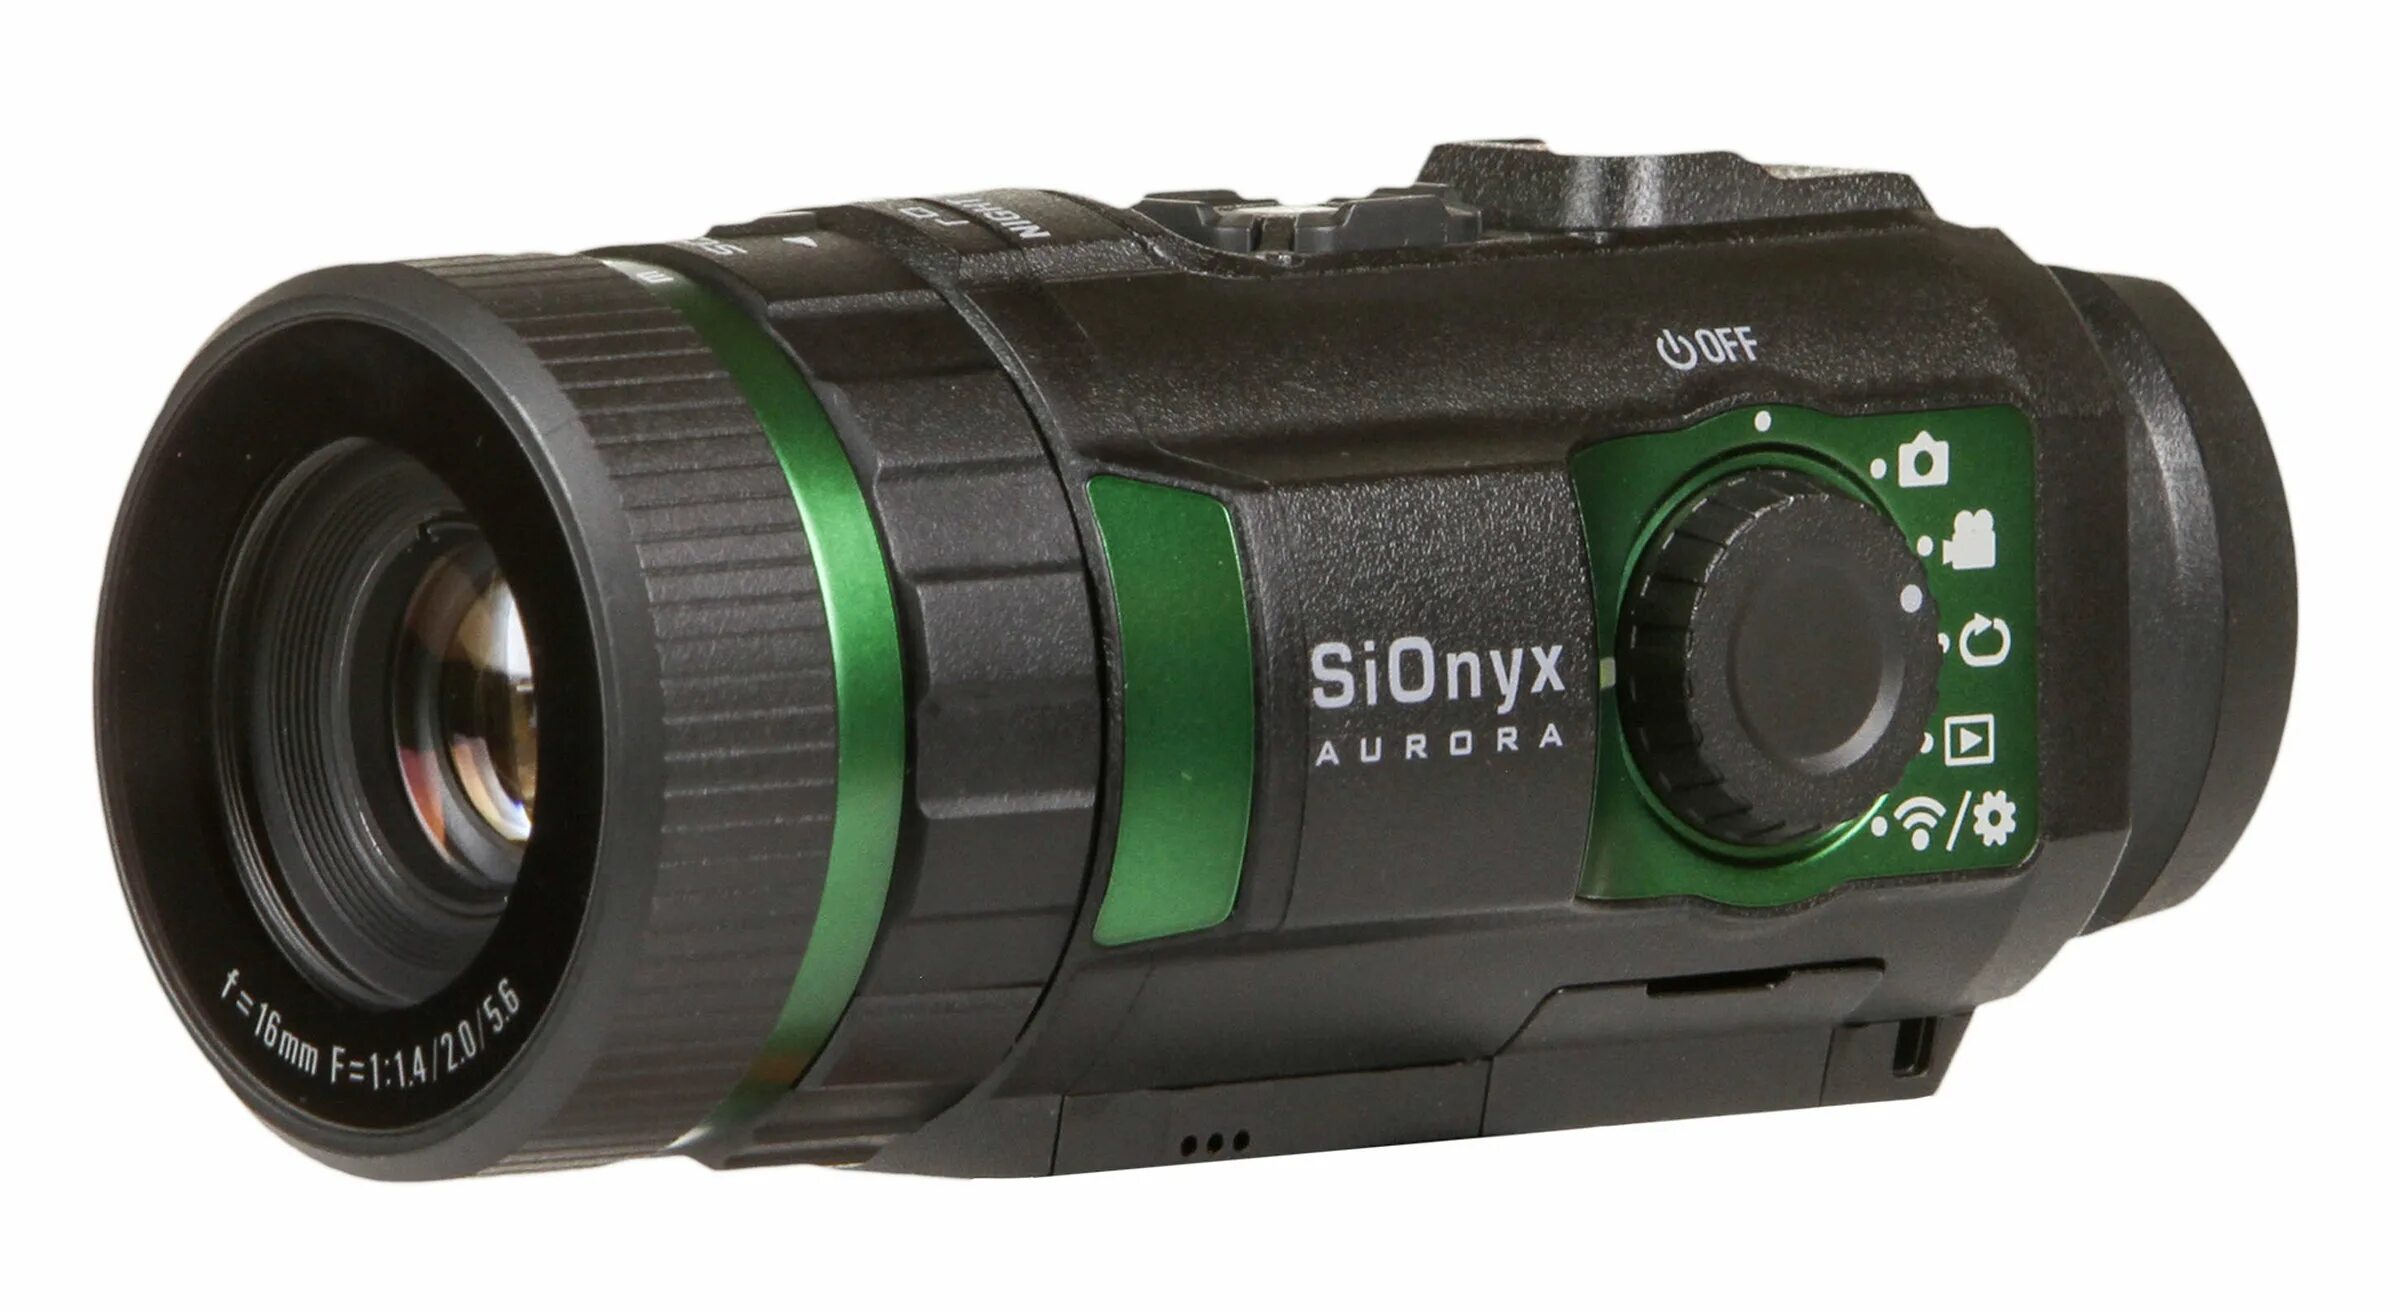 SIONIX Aurora камера. Night Vision камера. Видеокамера Full Color Night Vision. Wat-910hx. Купить камеру ночной съемки